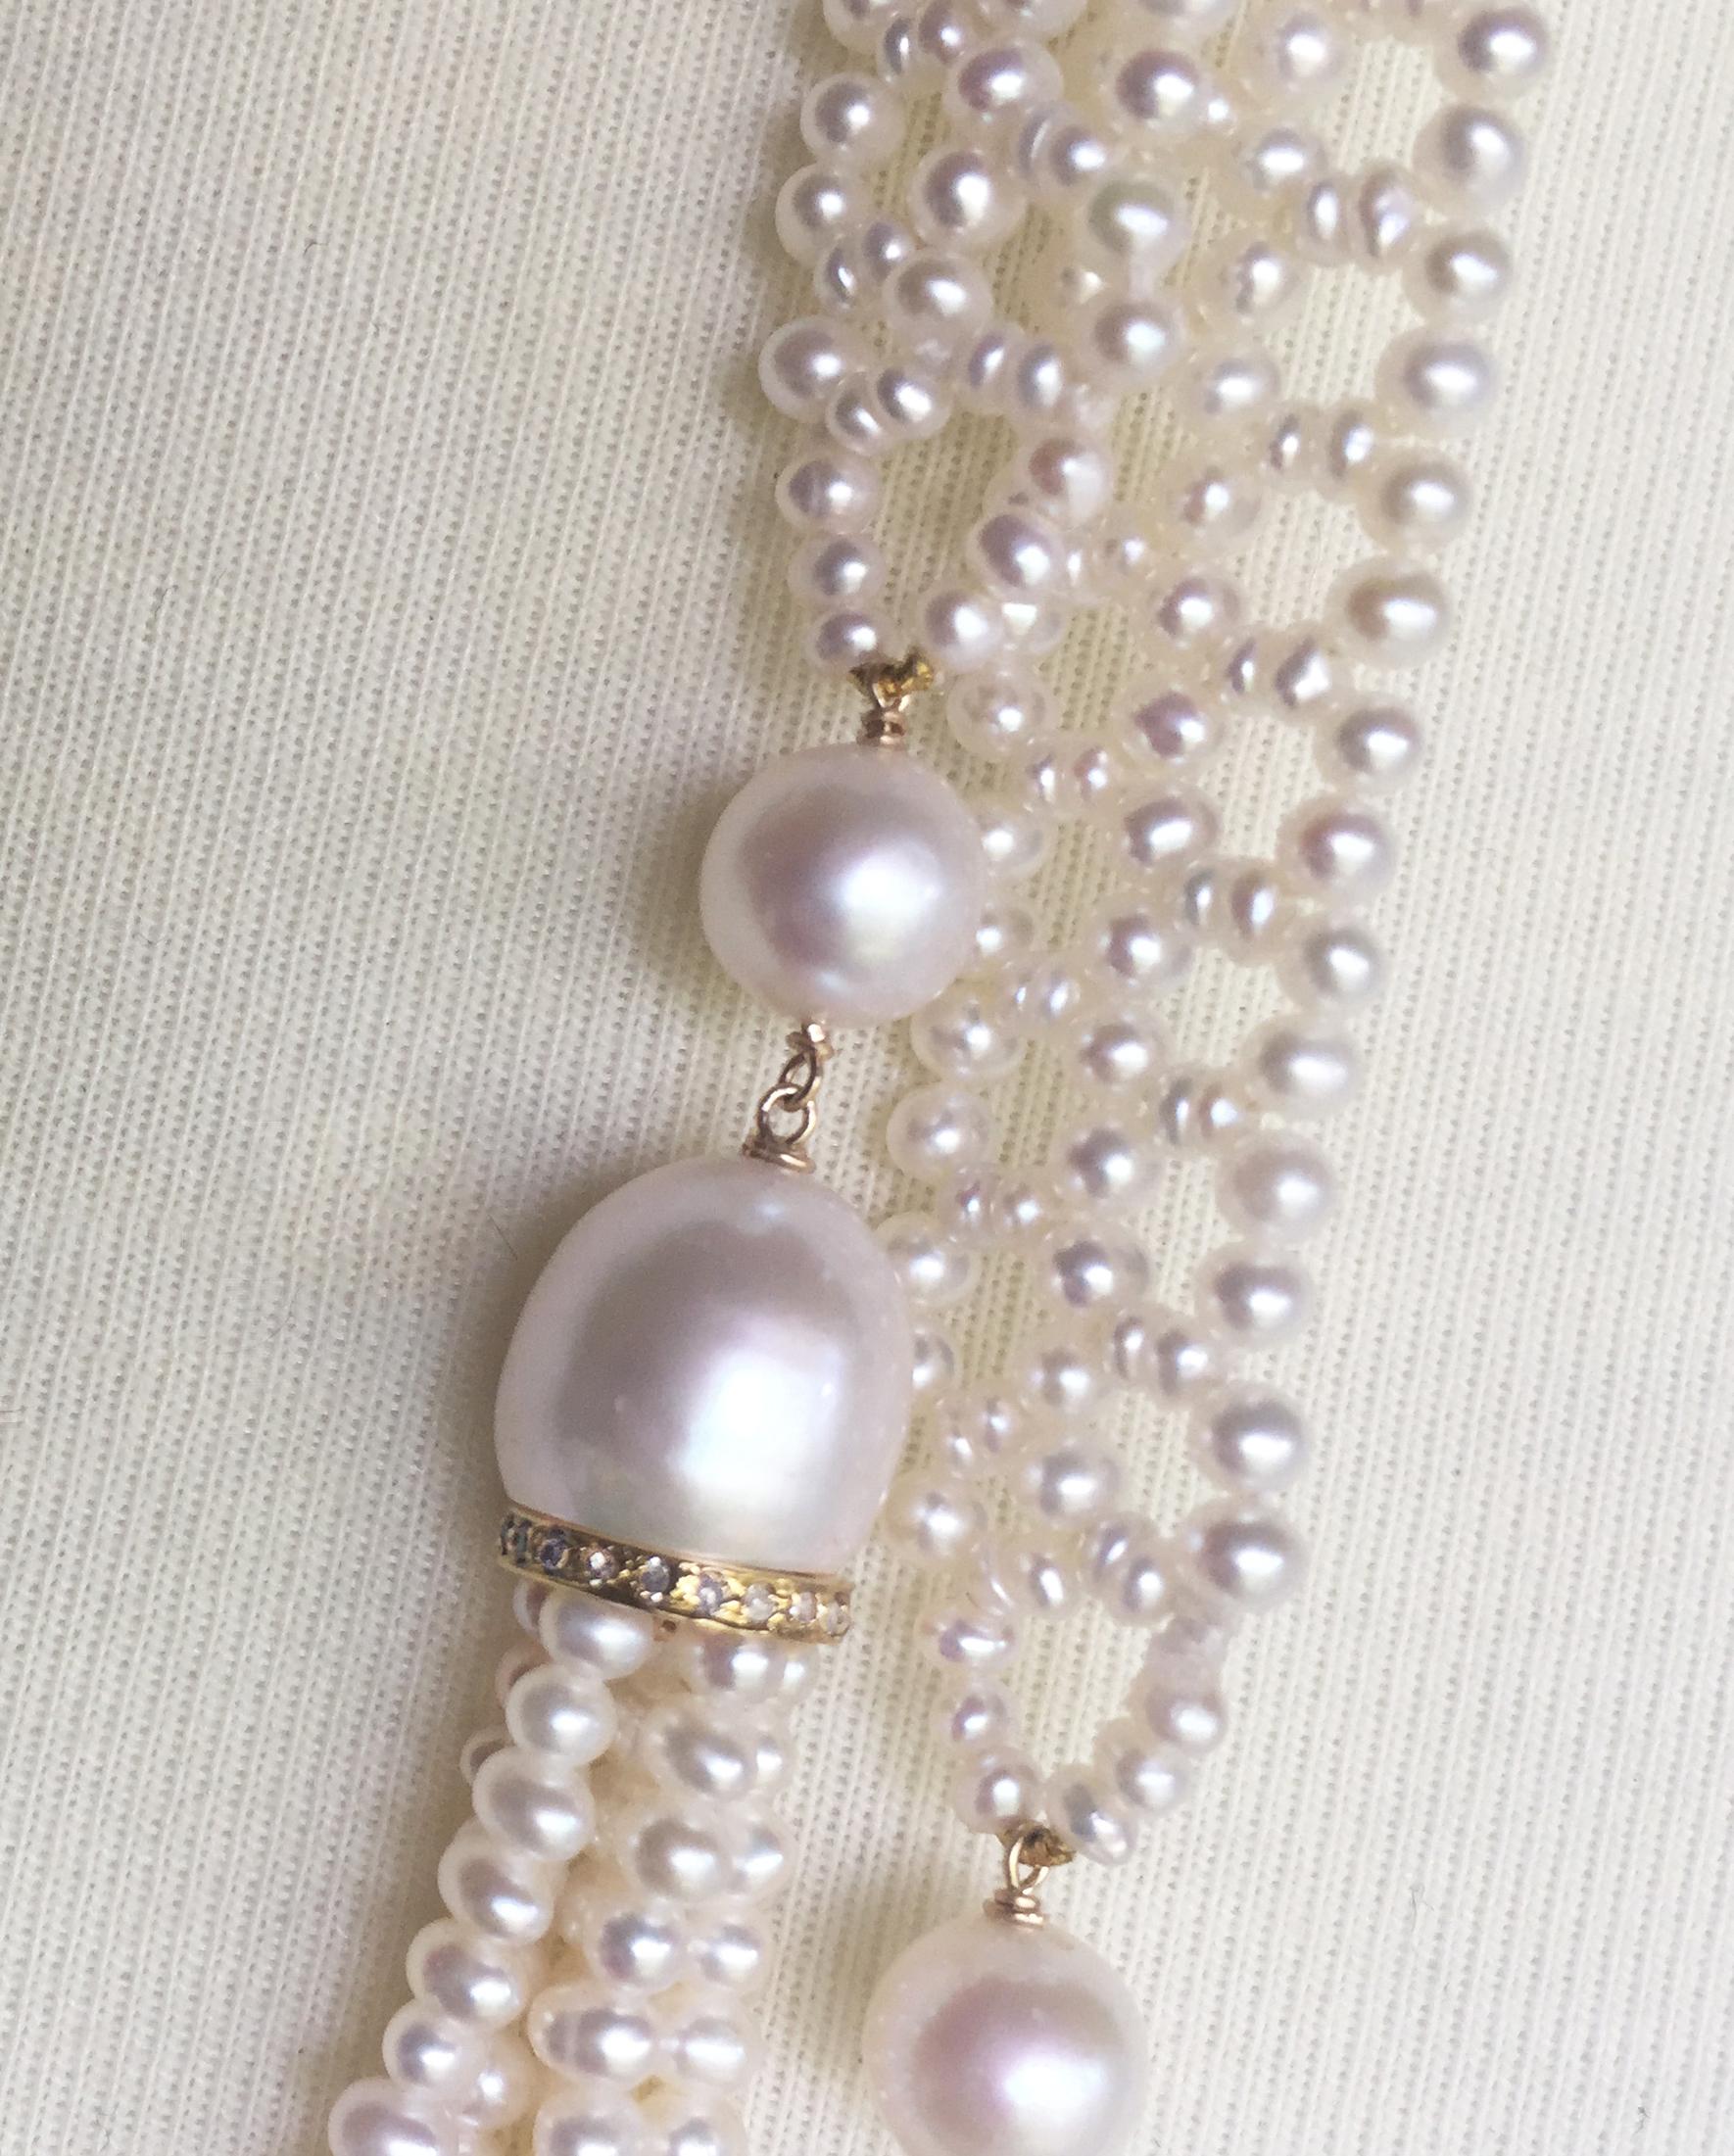 Marina J Woven Pearl Sautoir Necklace with Diamonds and 14 K God Tassels 2